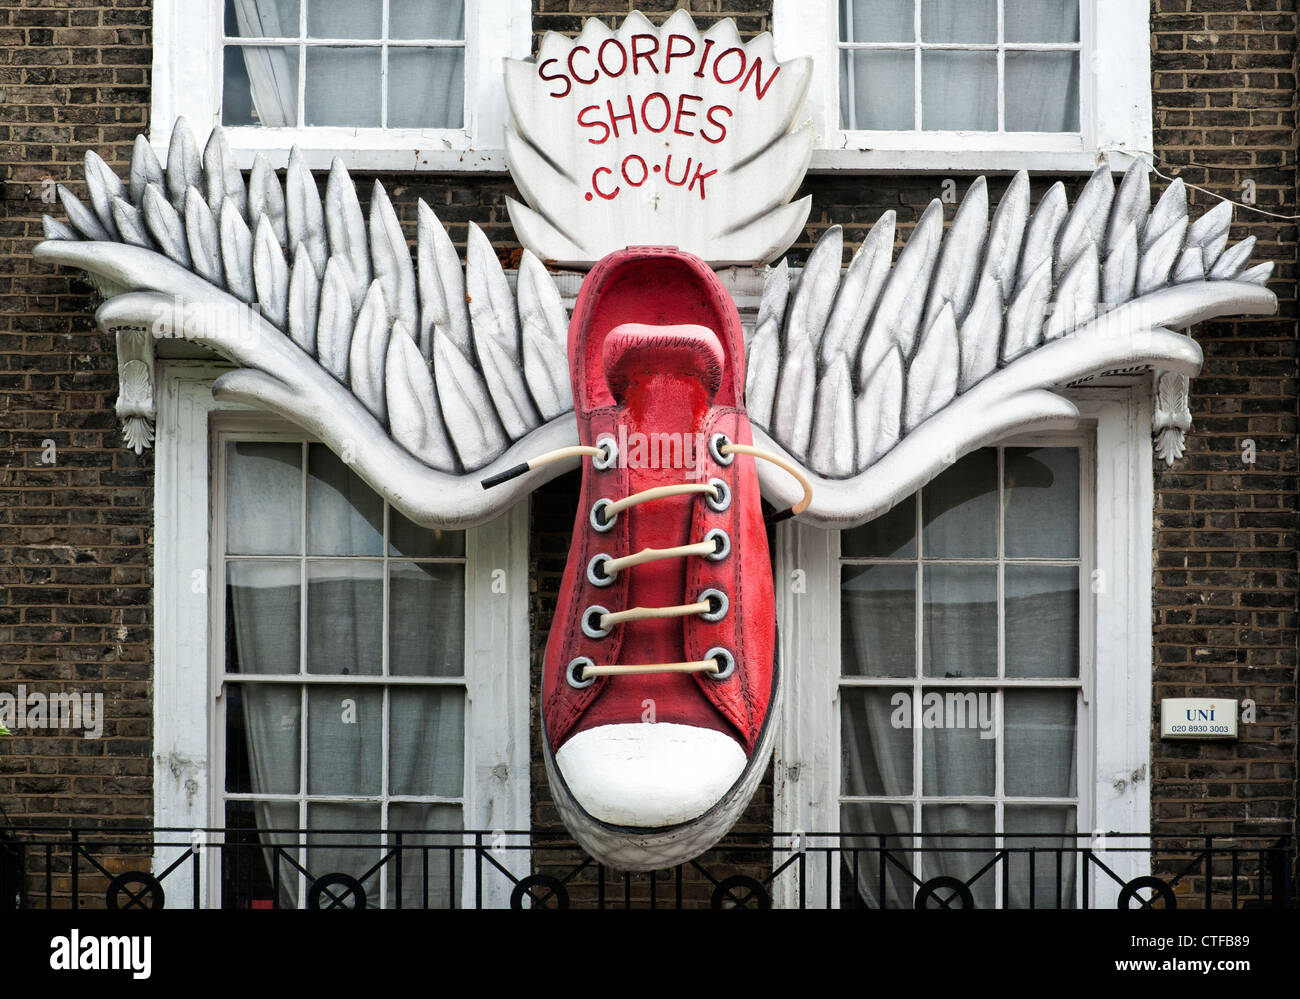 Camden Town High Street shoe shop. London Stock Photo - Alamy